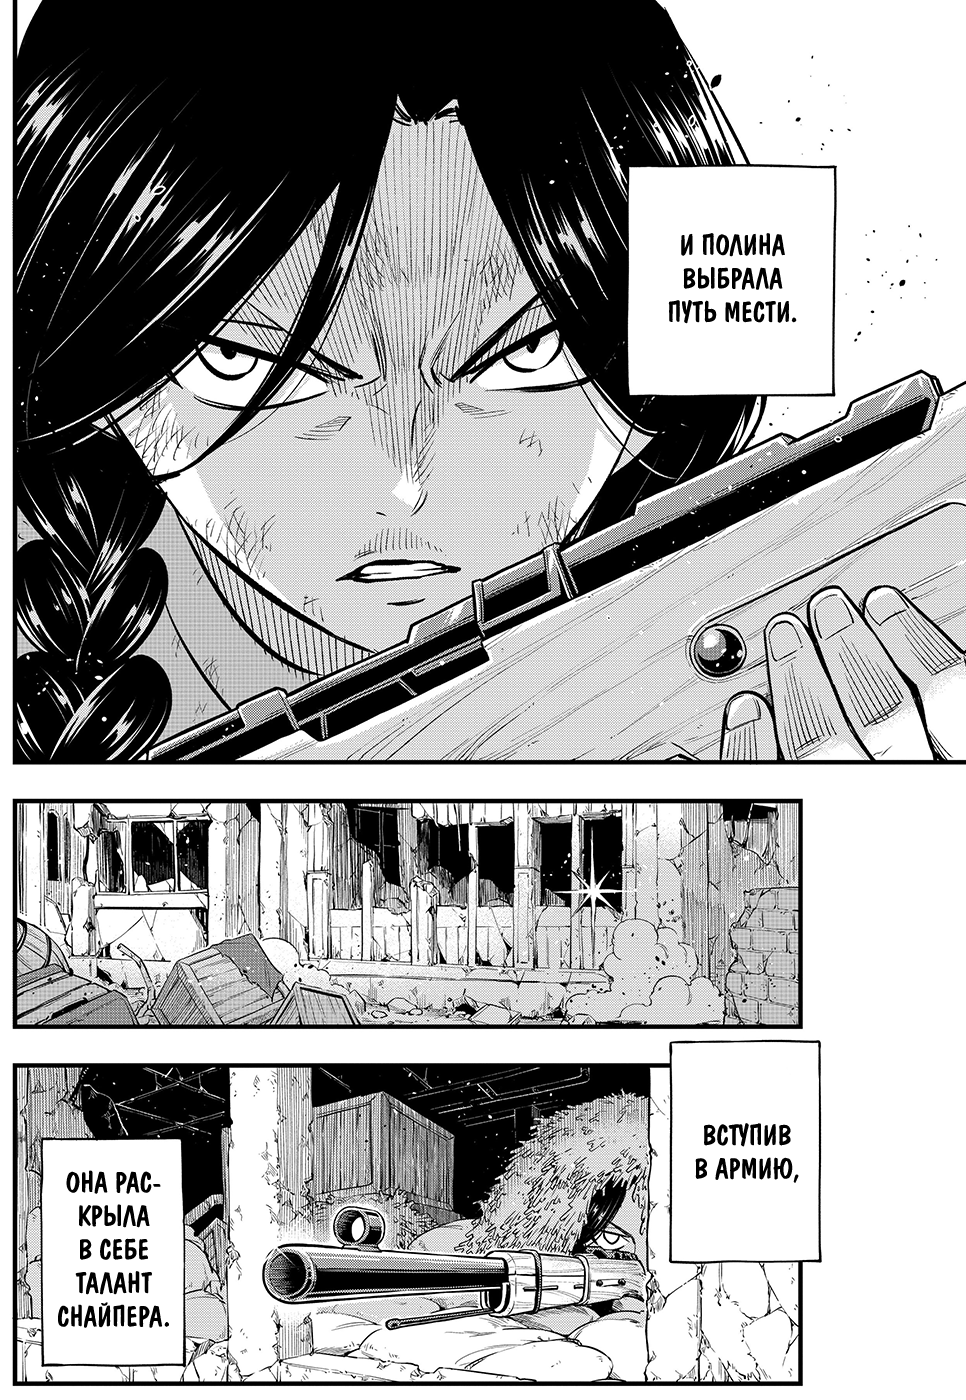 Backstory of sniper Polina Petrova from Call of Duty Vanguard by Massima Hiro - Manga, Anime, Anime art, Rave, Cranberry, Snipers, The Second World War, Longpost